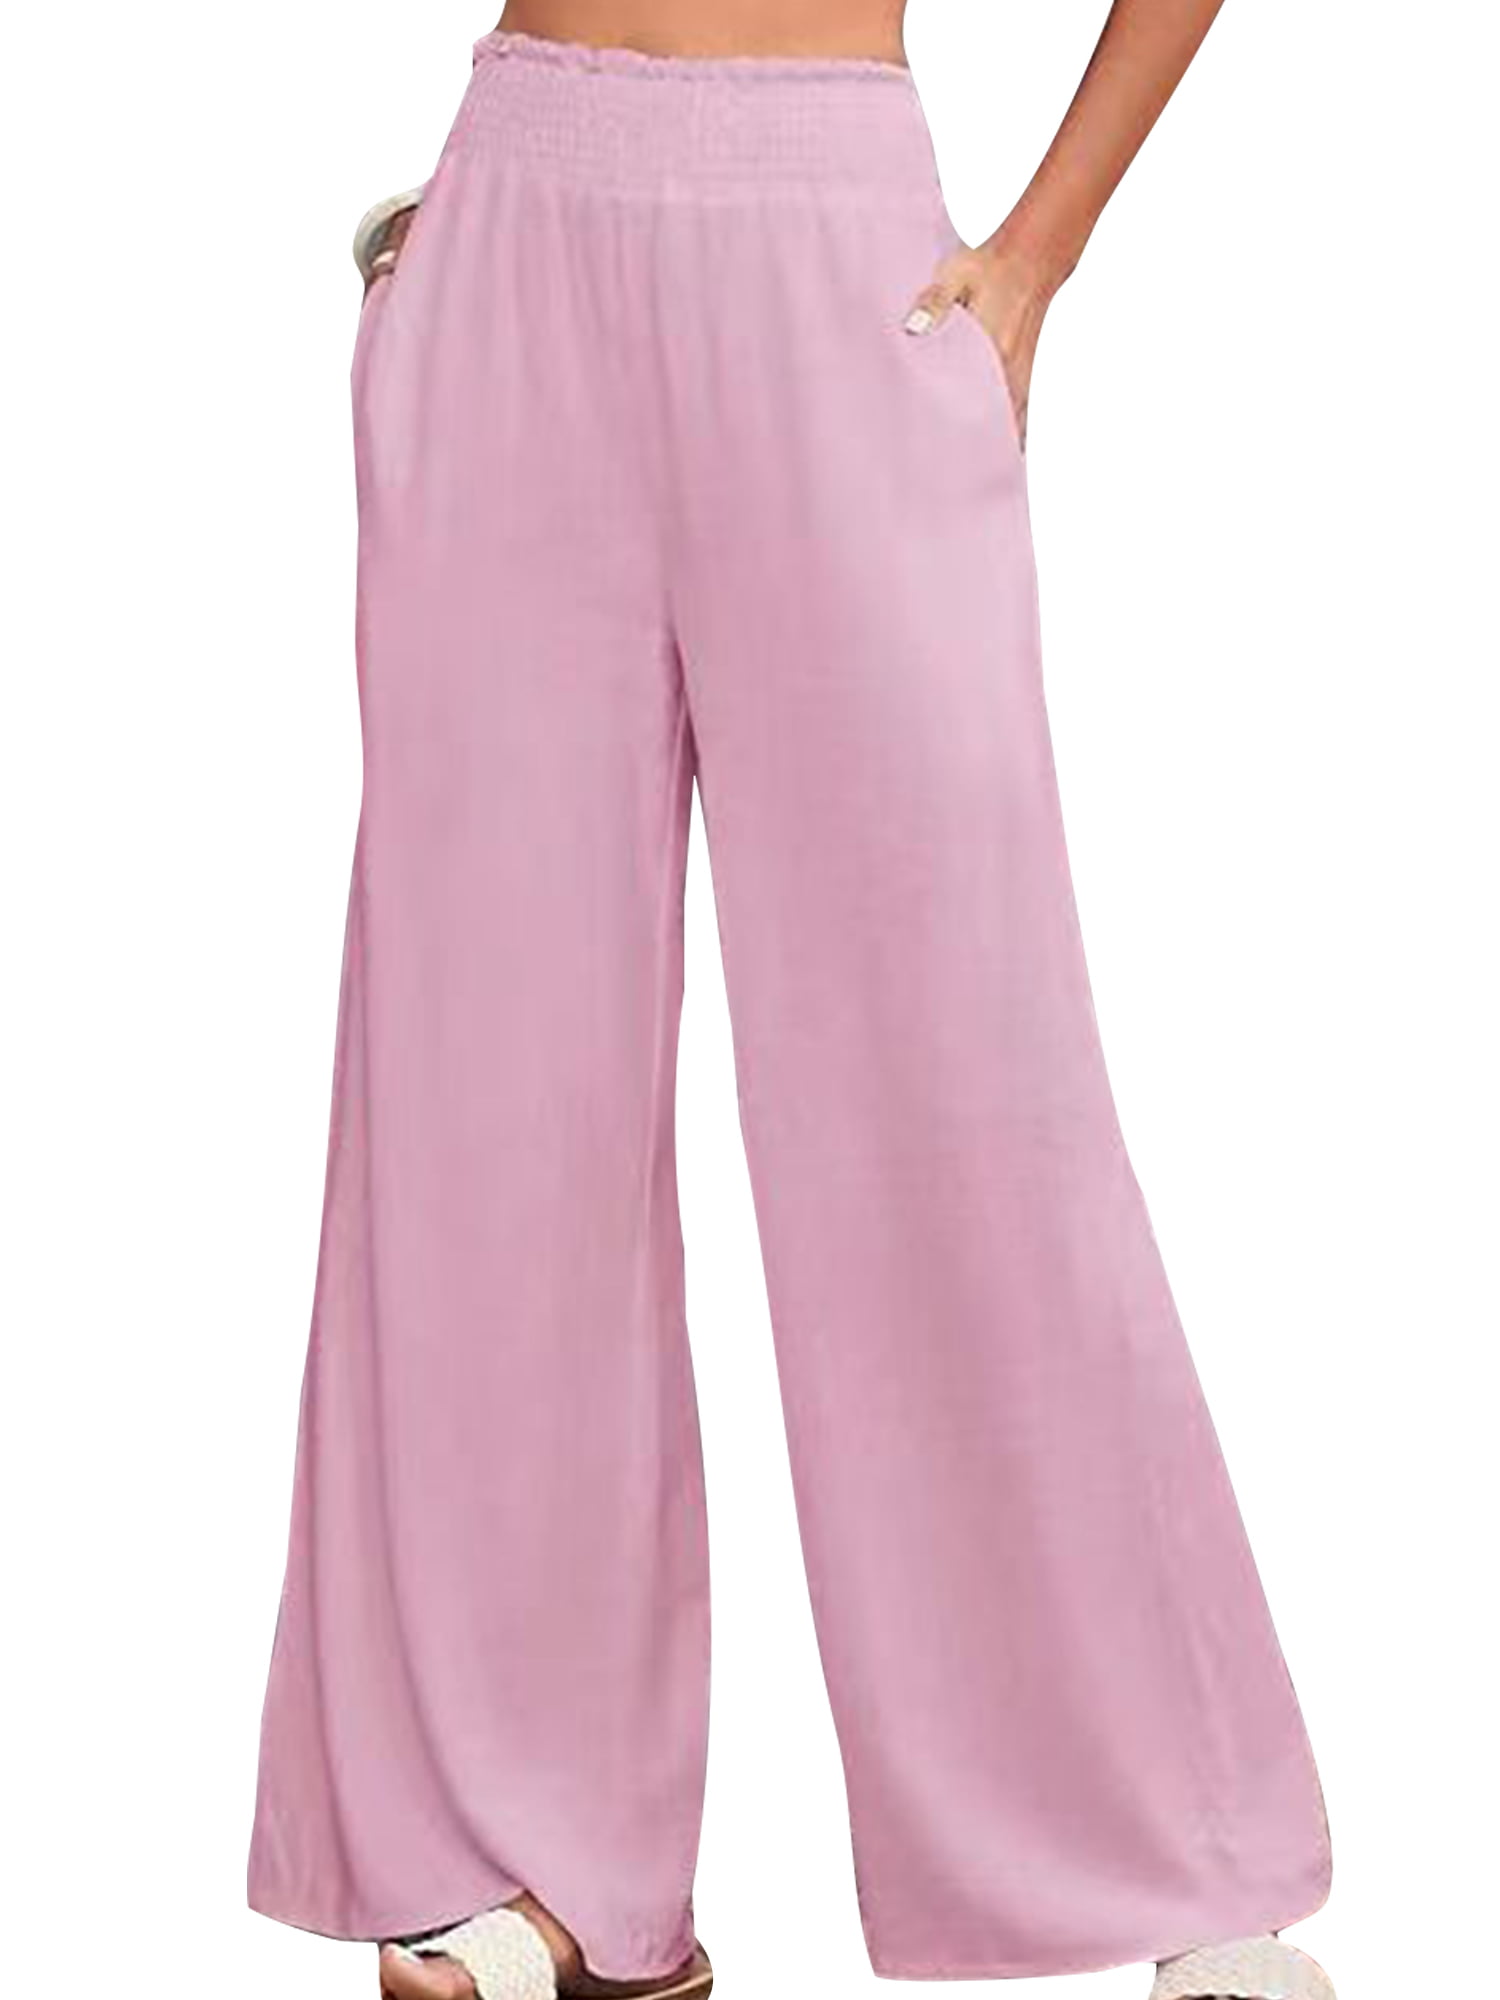 DOLCE & GABBANA Pants Pink Lace Trimmed Silk Satin Wide Legs IT38/US4/XS  $2300 | eBay